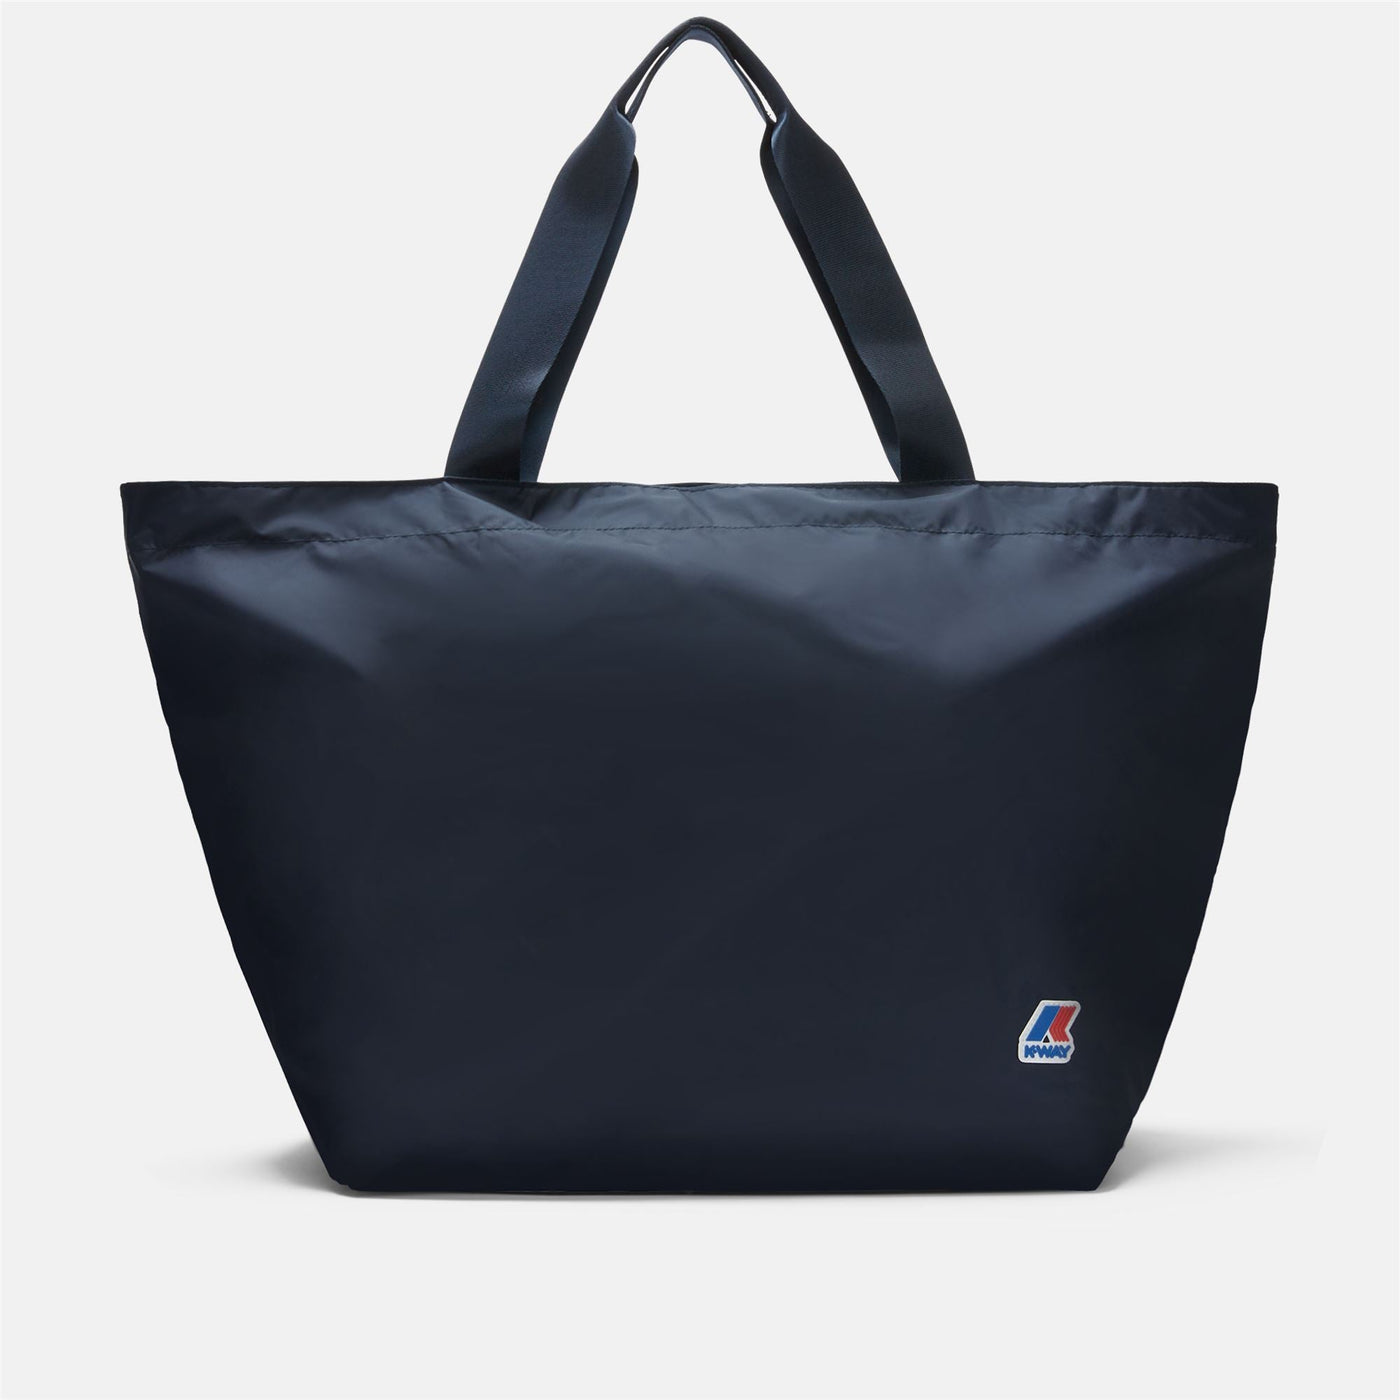 Bags Woman ERINA L Shopping Bag Blue Depth | K-Way Photo (jpg Rgb)			